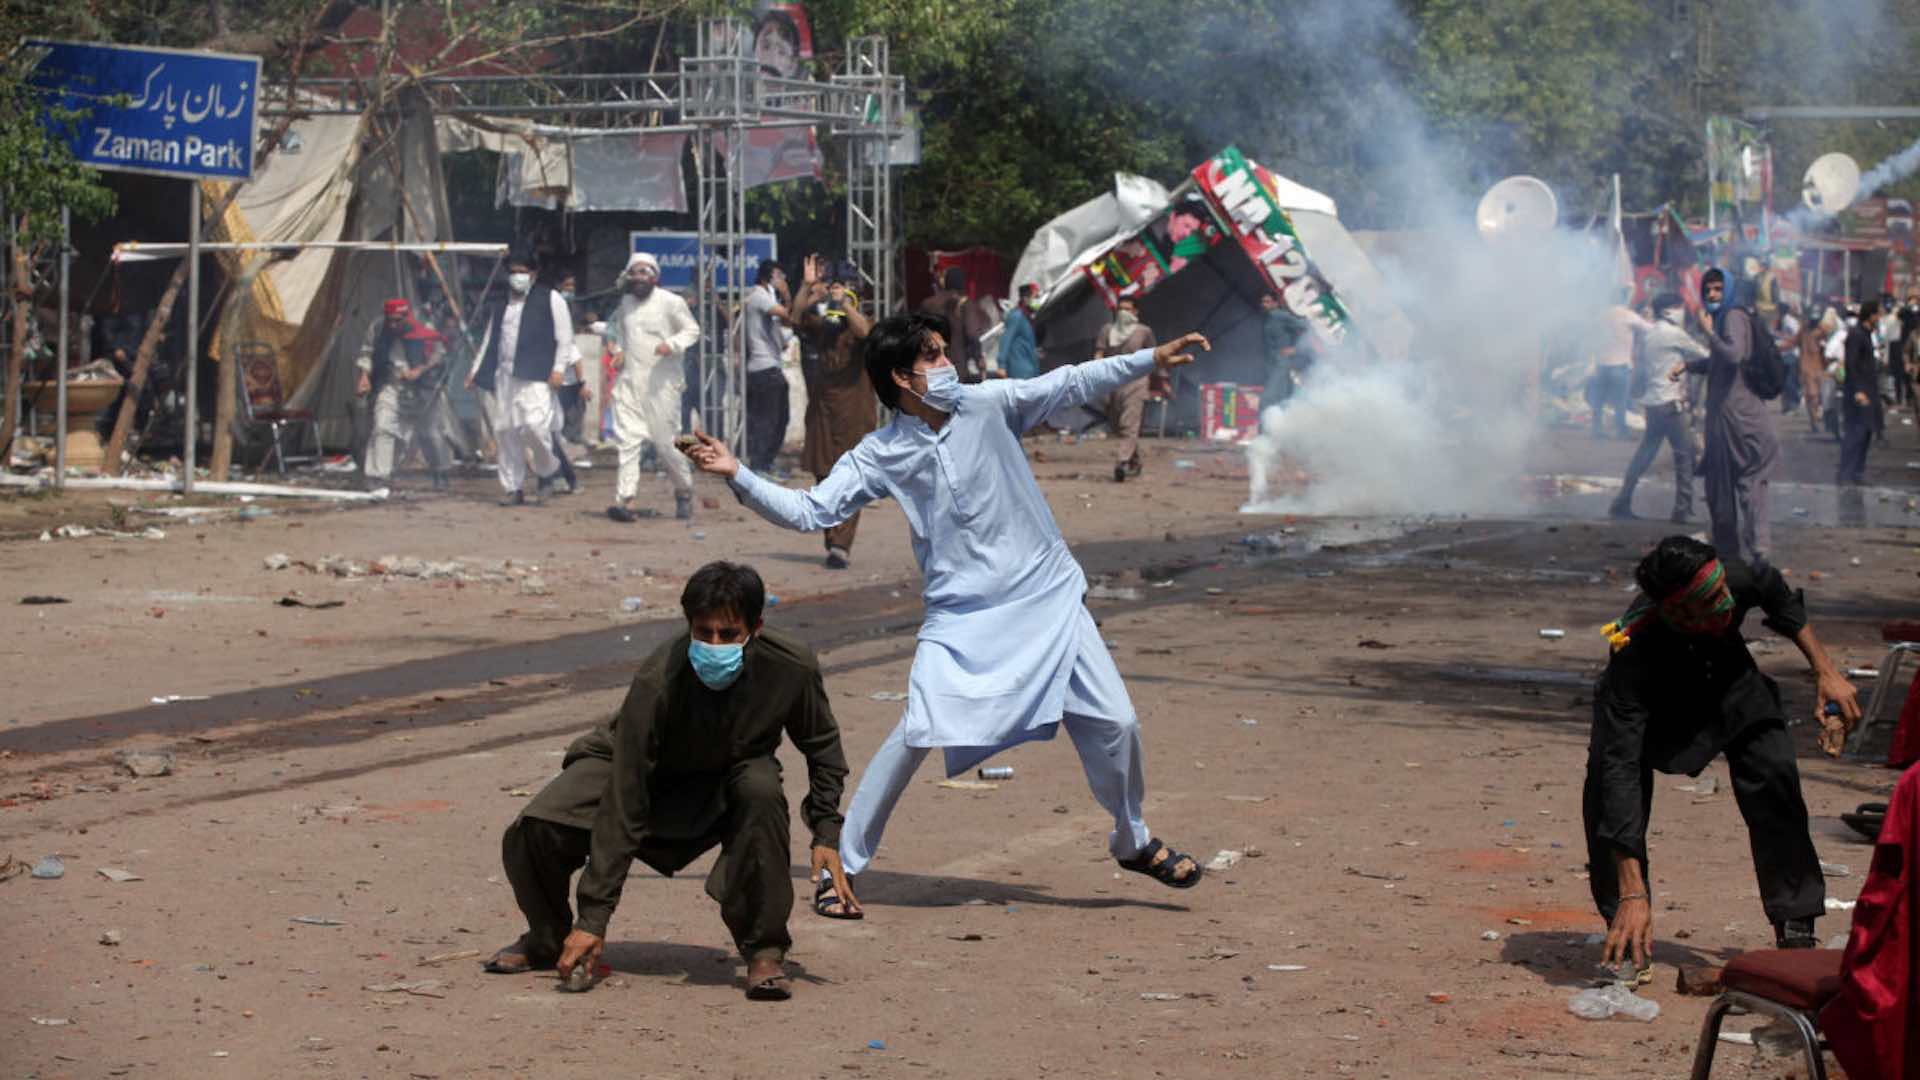 Pakistan faces unrest and potential civil war following Imran Khan's arrest